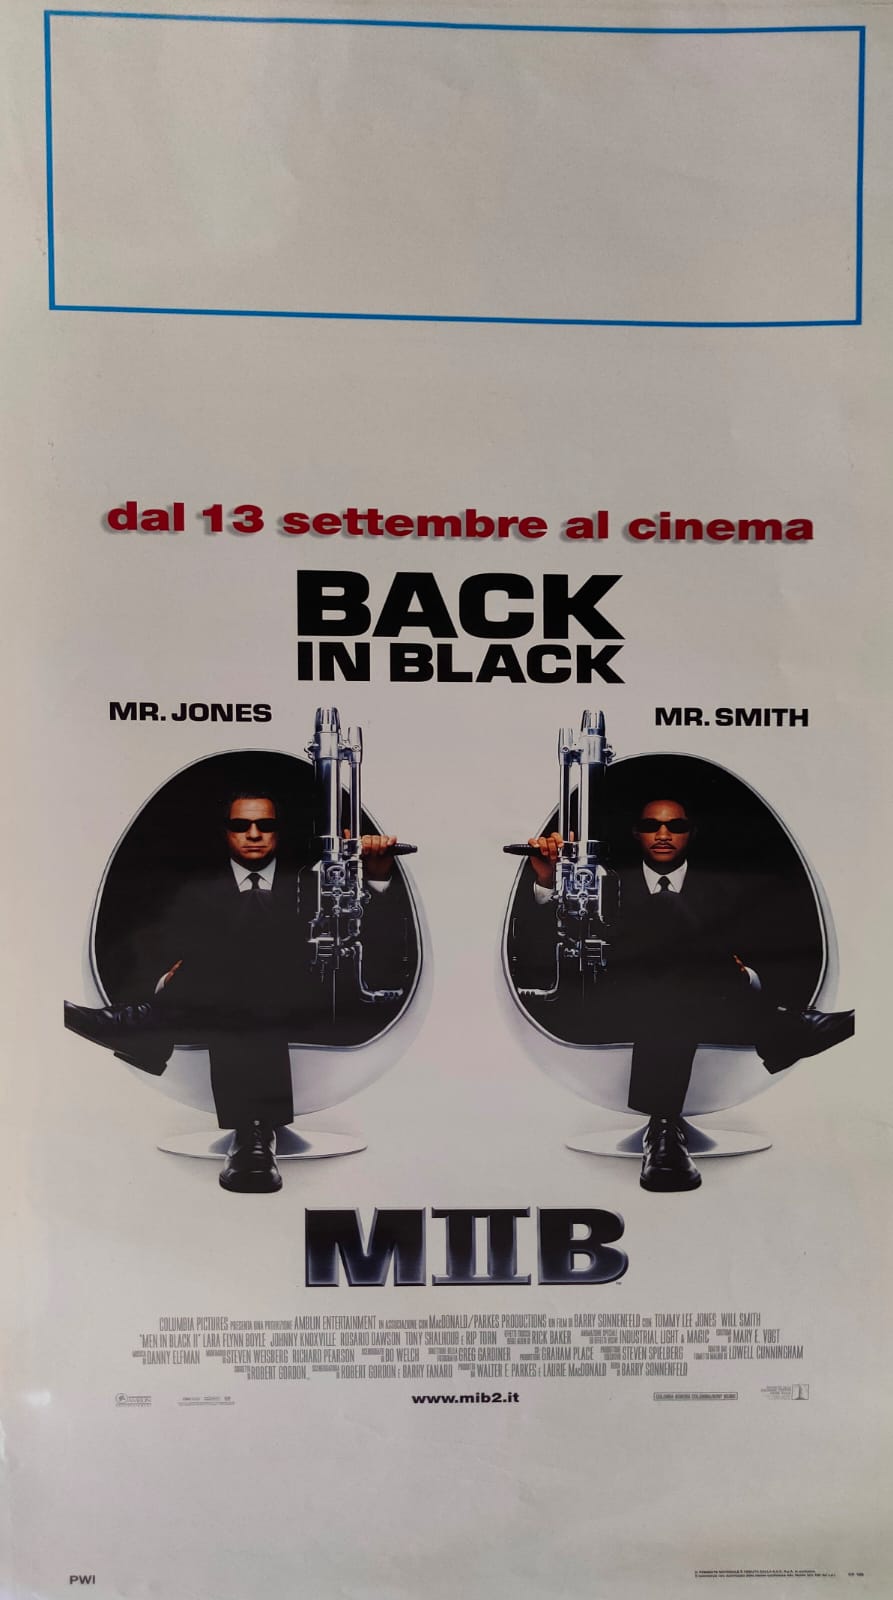 Locandina originale di cinema - MIB Back in Black